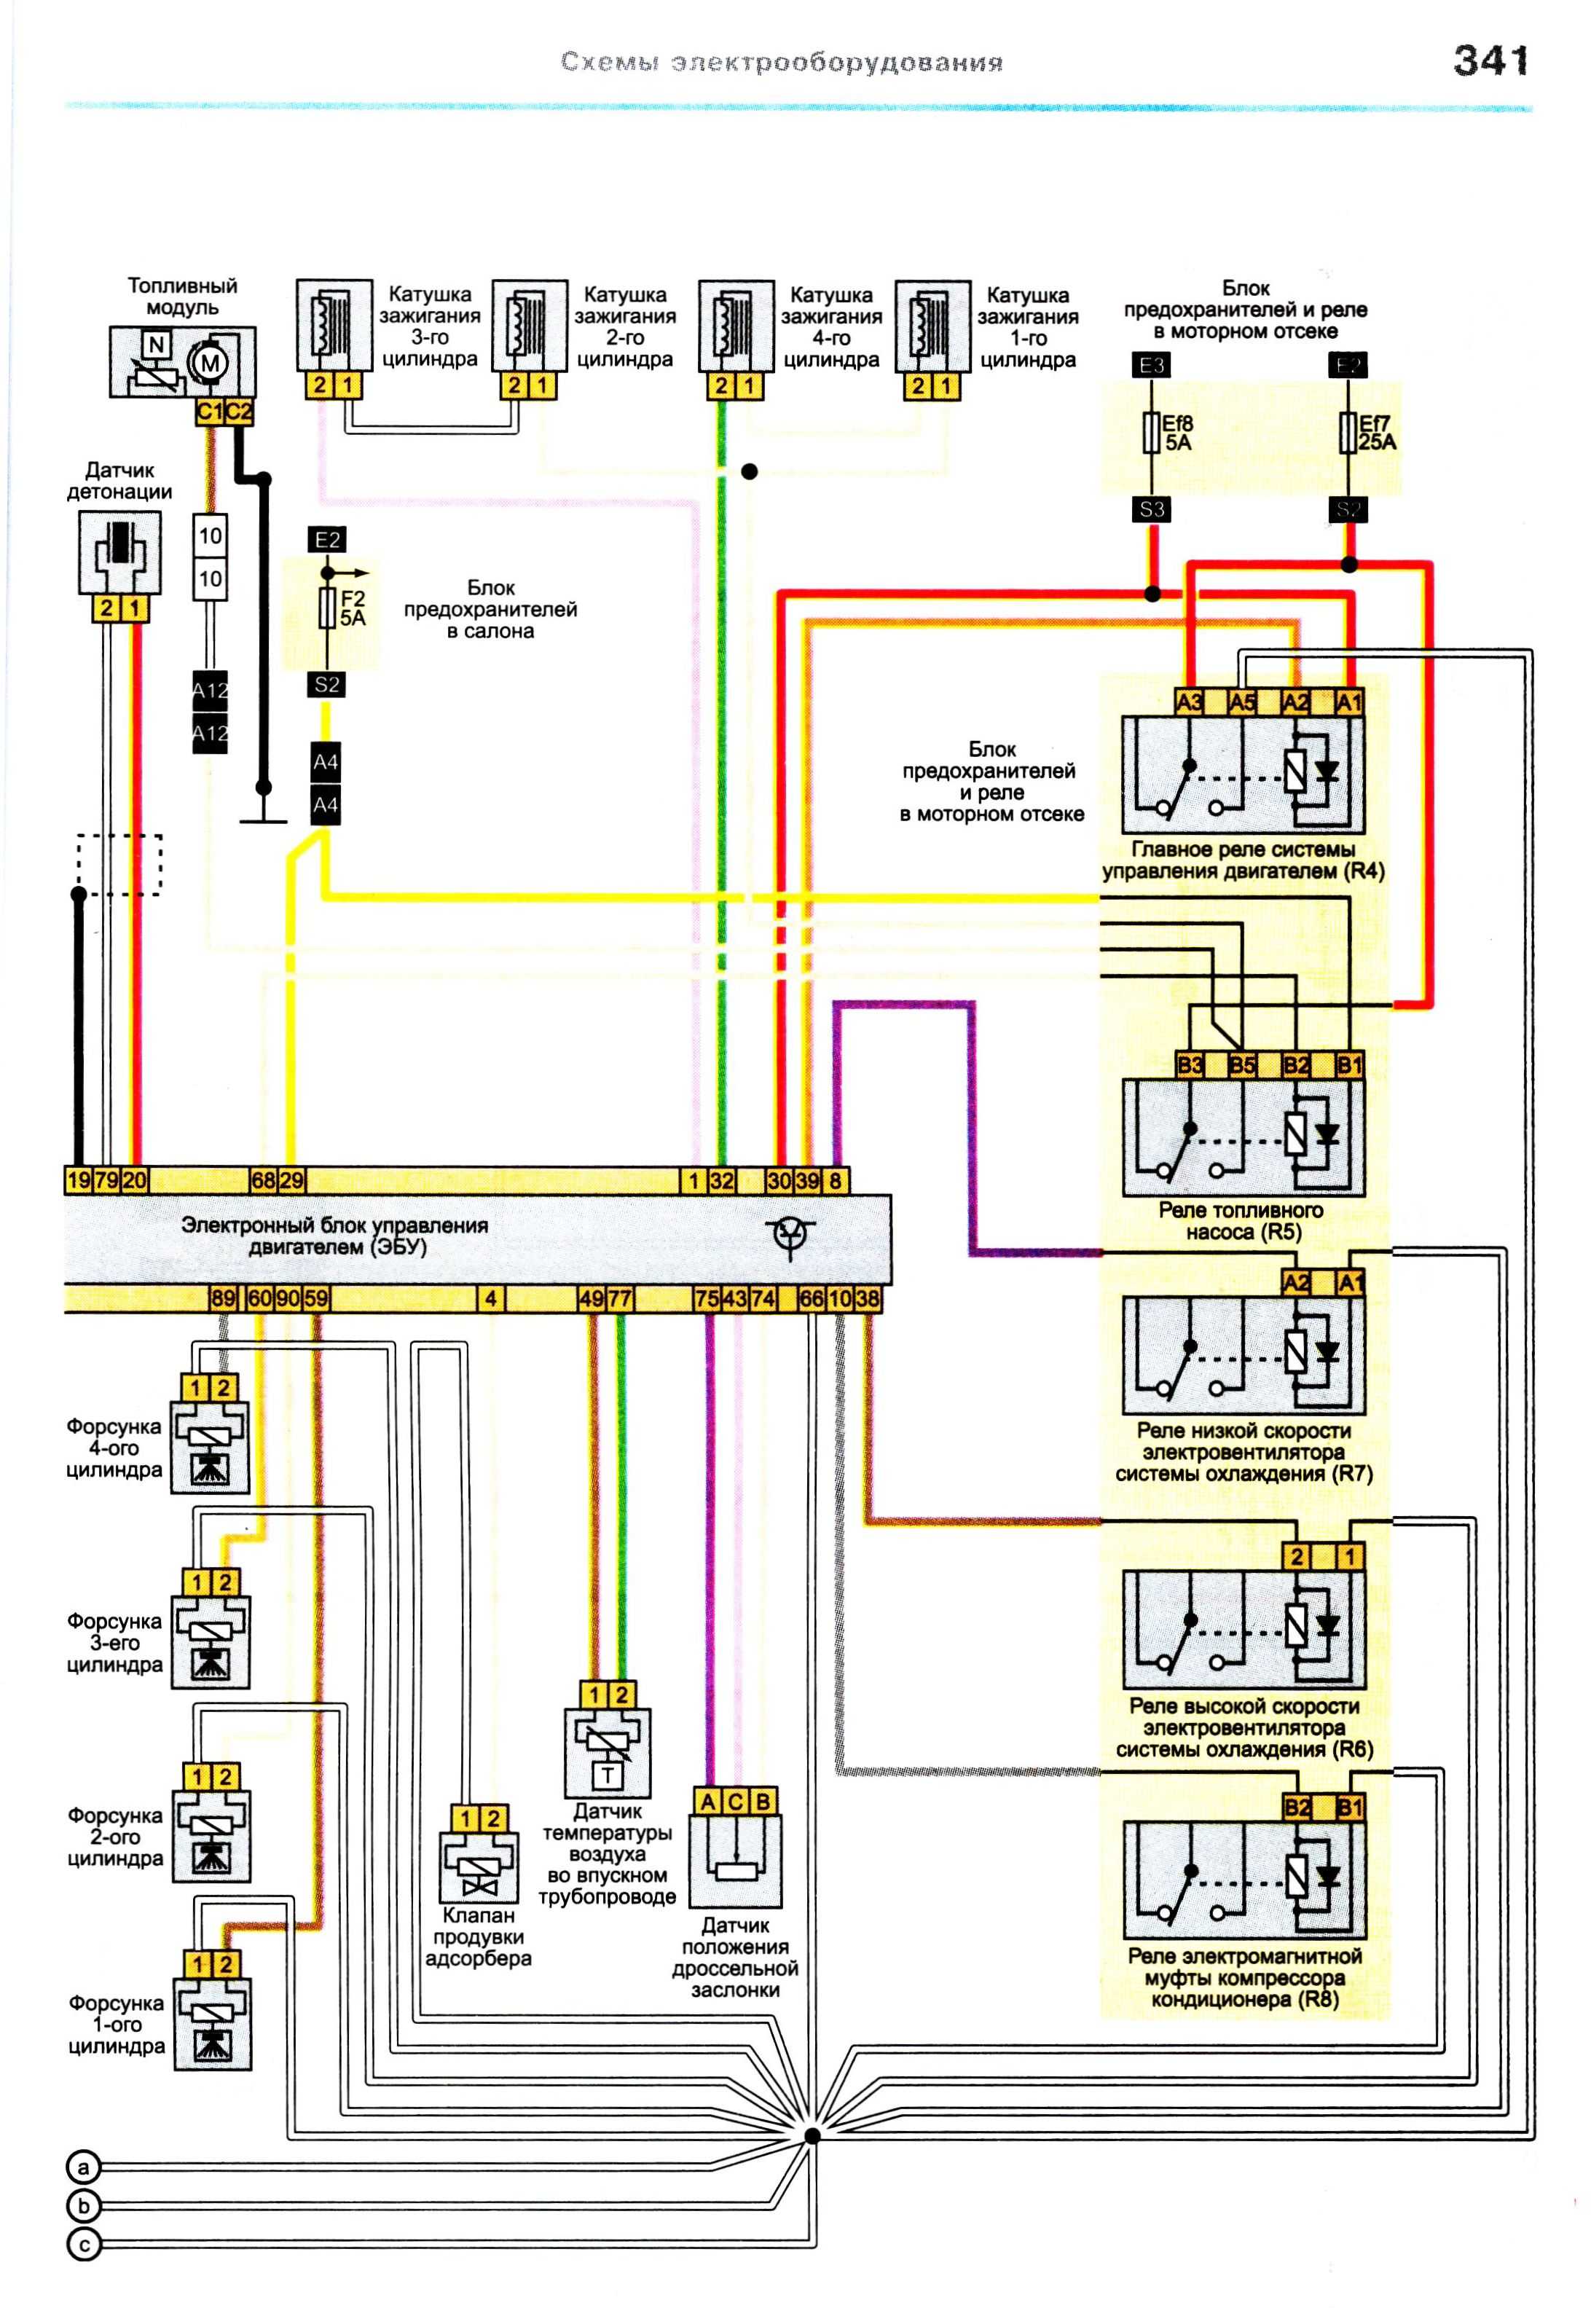 Установка автосигнализации на vw polo - точки подключения, расположение и цвета проводов